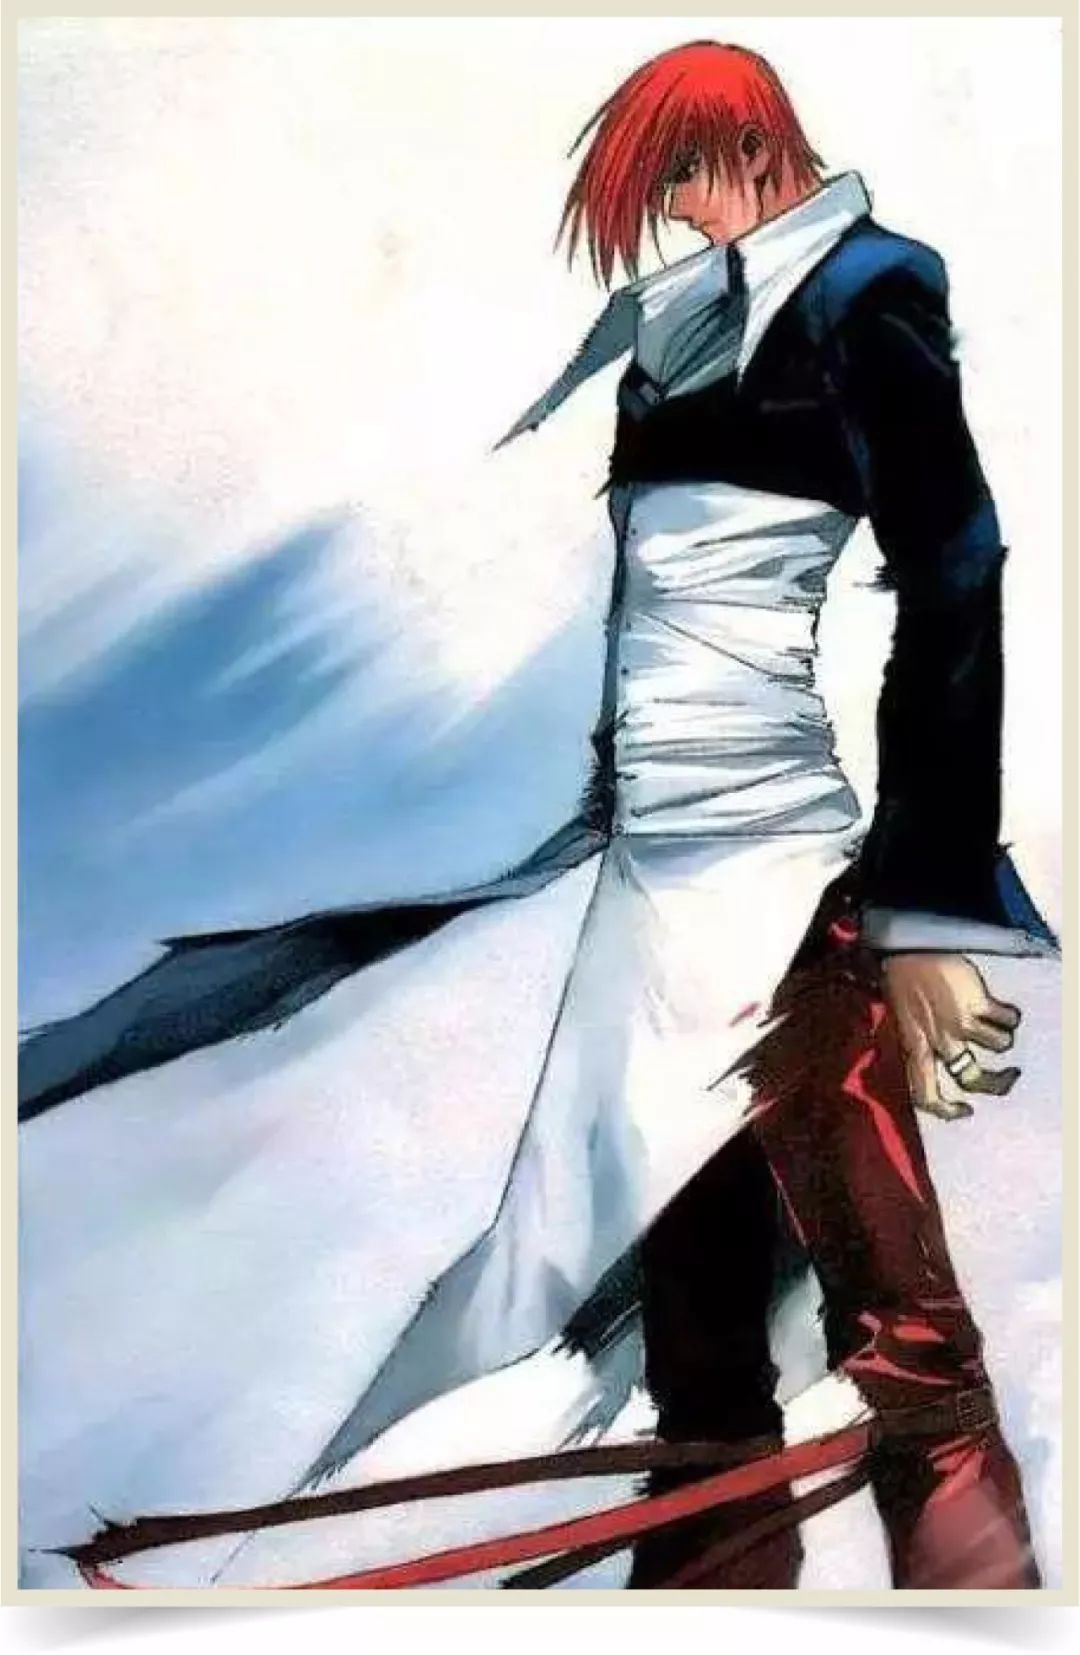 King of Fighters Image #908862 - Zerochan Anime Image Board